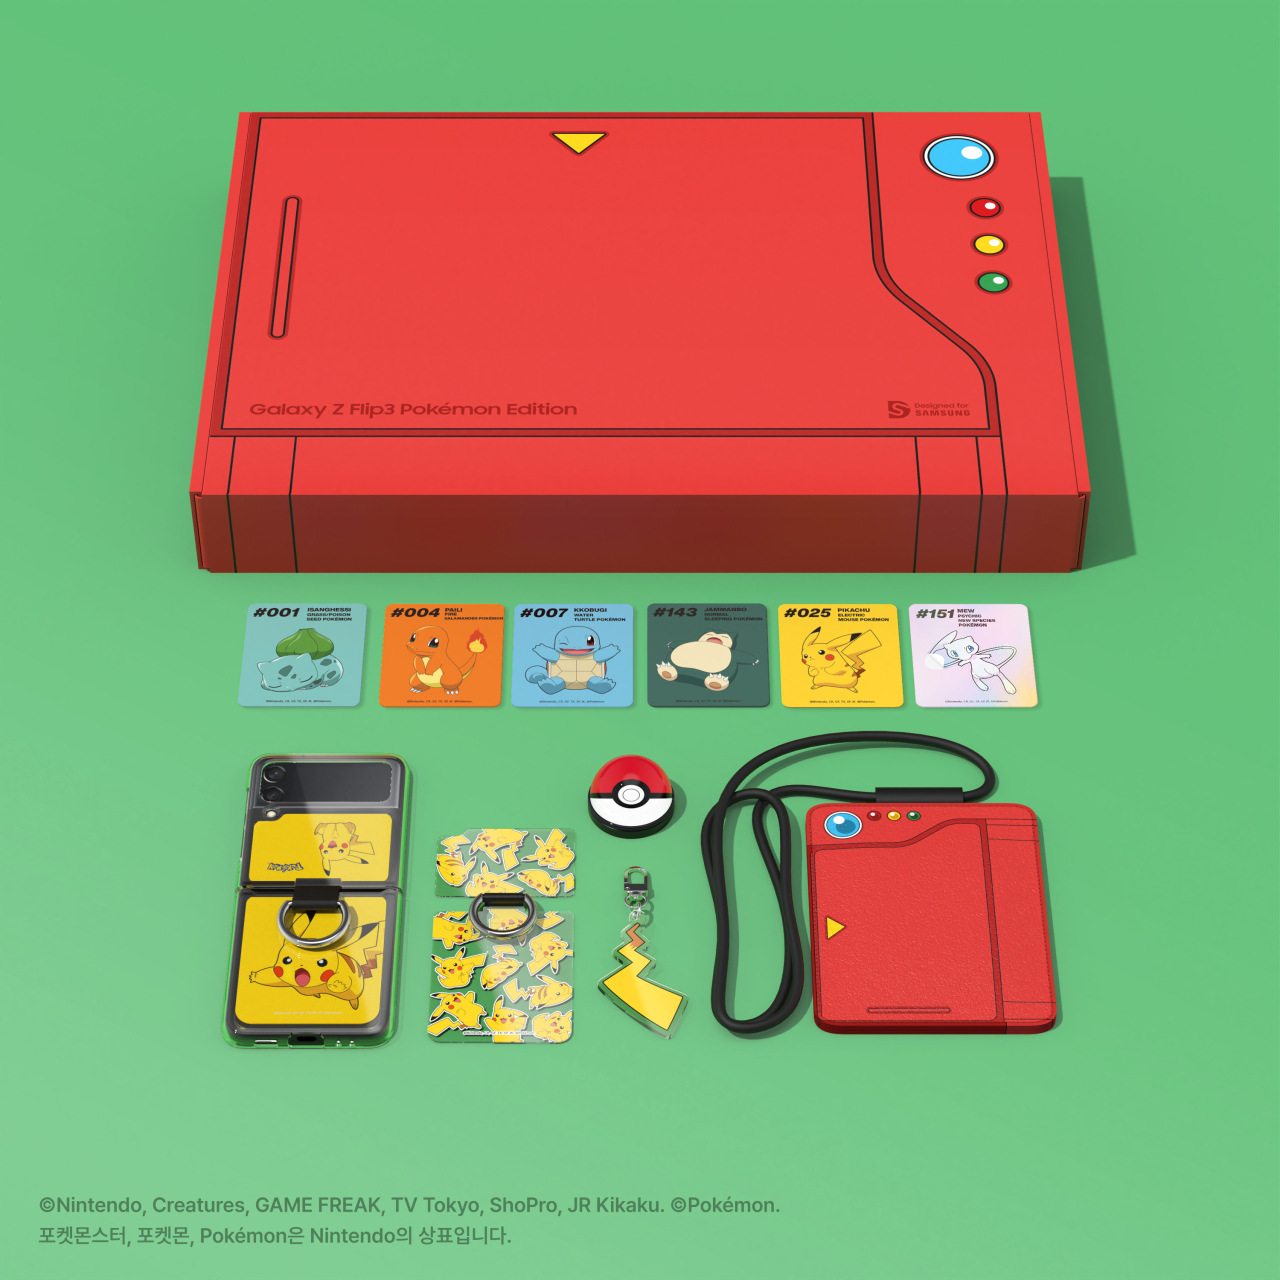 Galaxy Z Flip 3 Pokemon Edition package (Samsung Electronics)